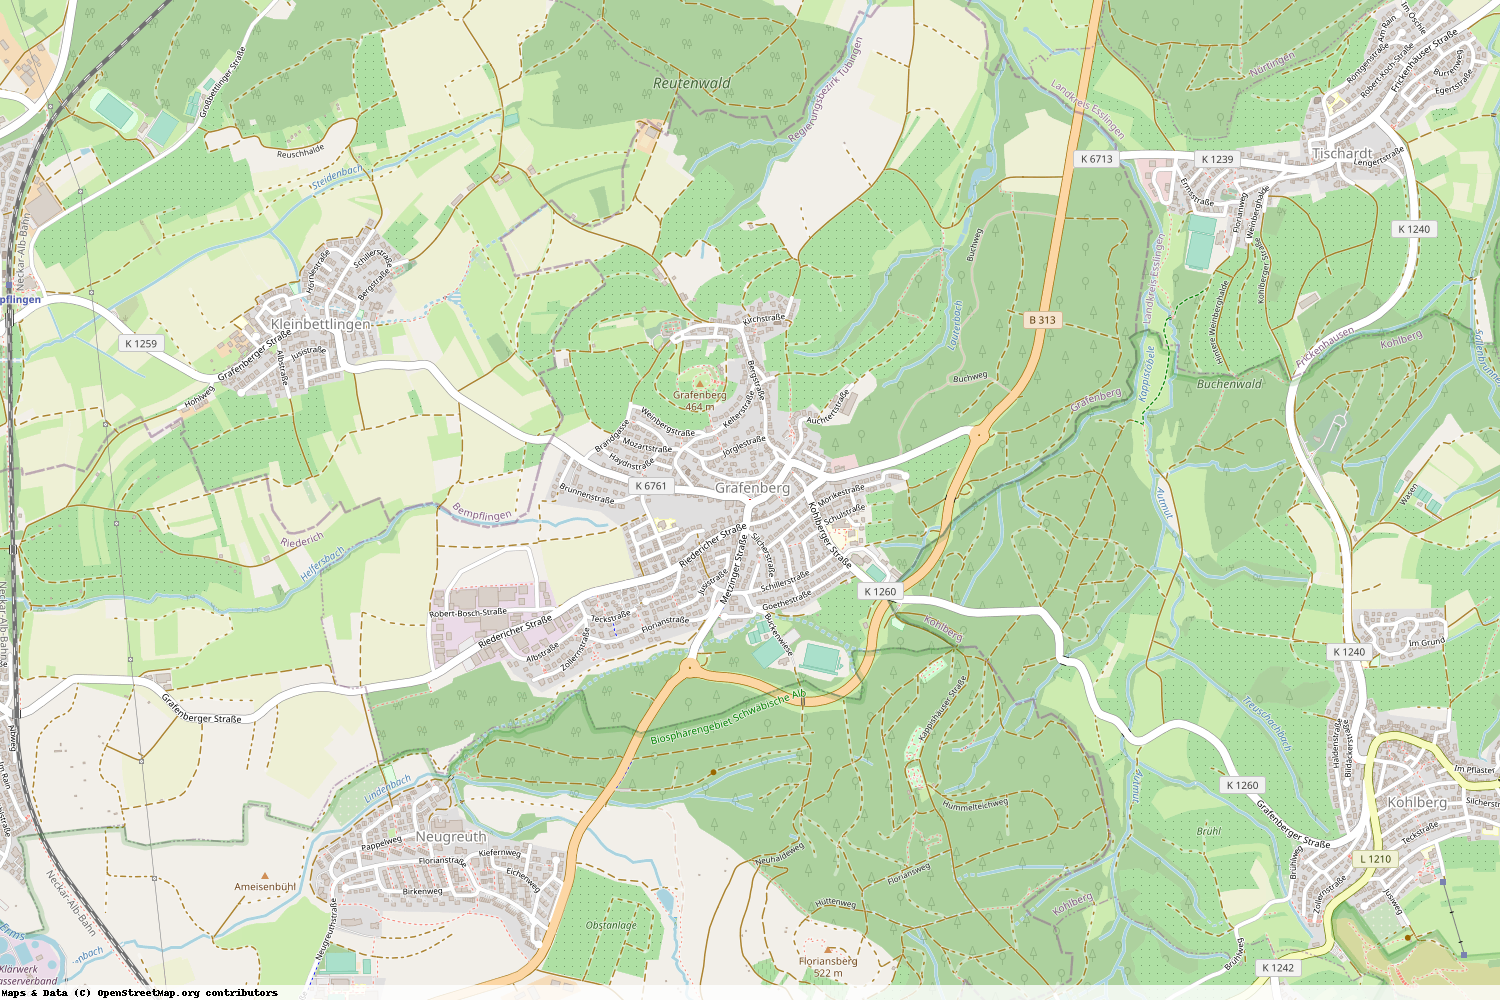 Ist gerade Stromausfall in Baden-Württemberg - Reutlingen - Grafenberg?